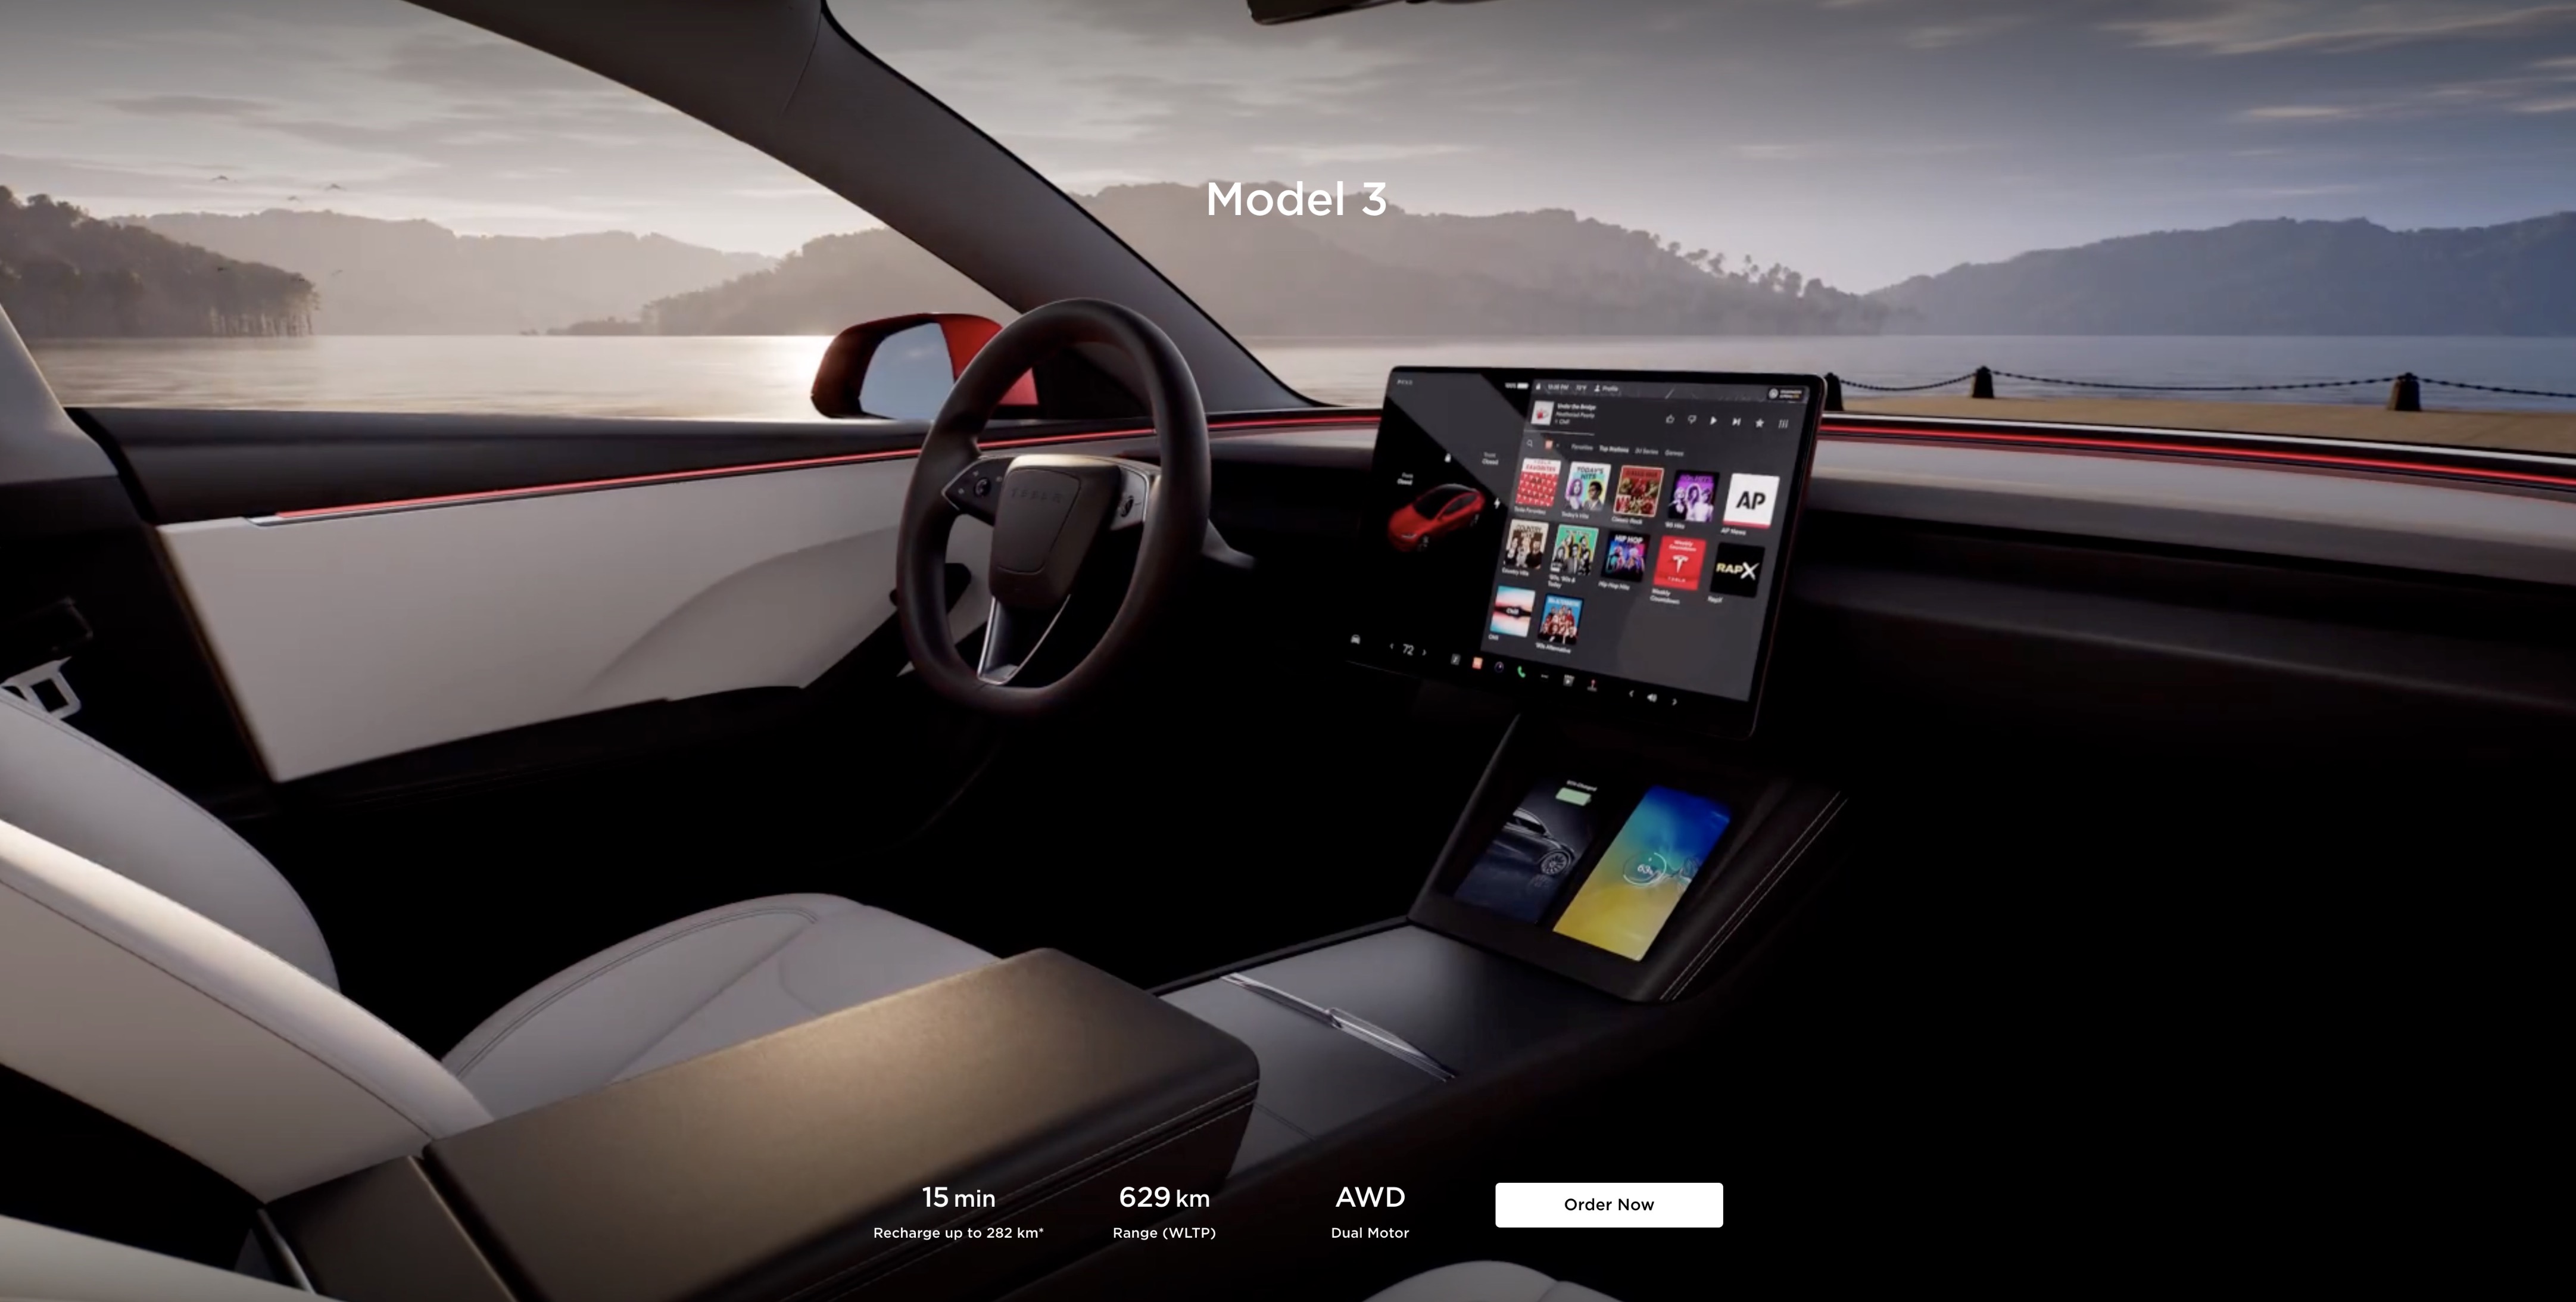 New 2021 Tesla Model 3 Driven - Now Even Better